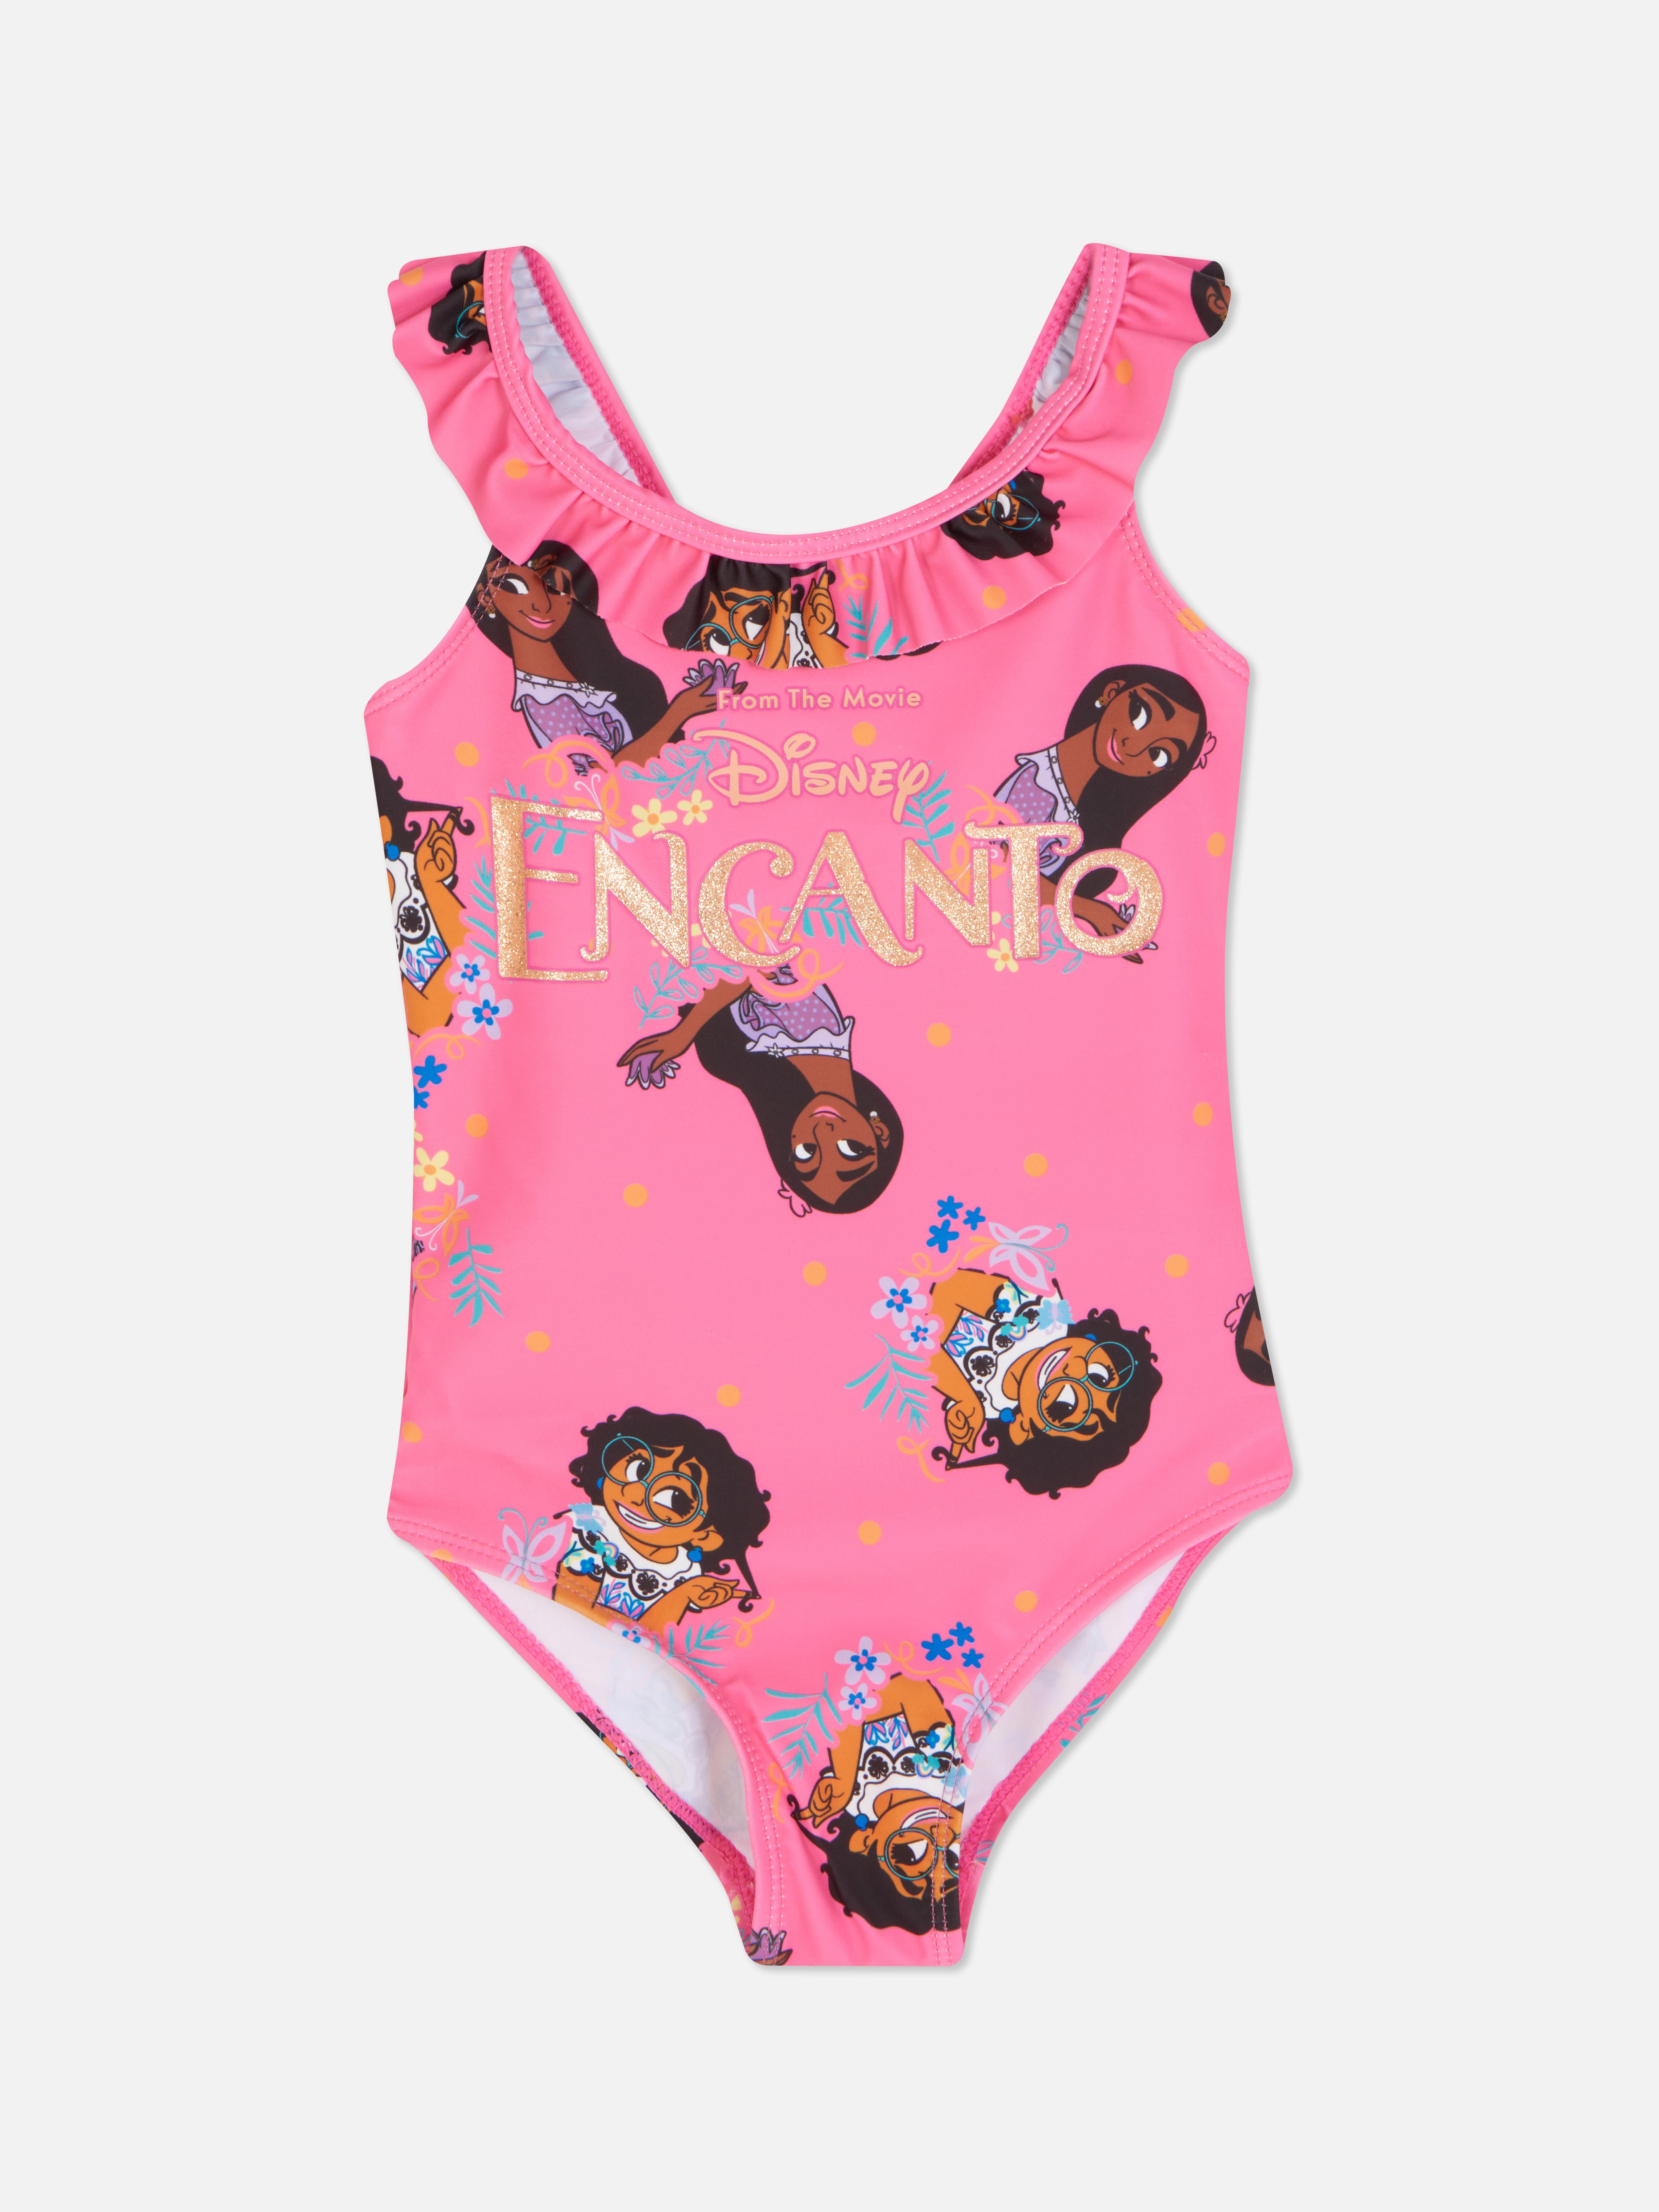 Disney's Encanto Ruffle Swimsuit